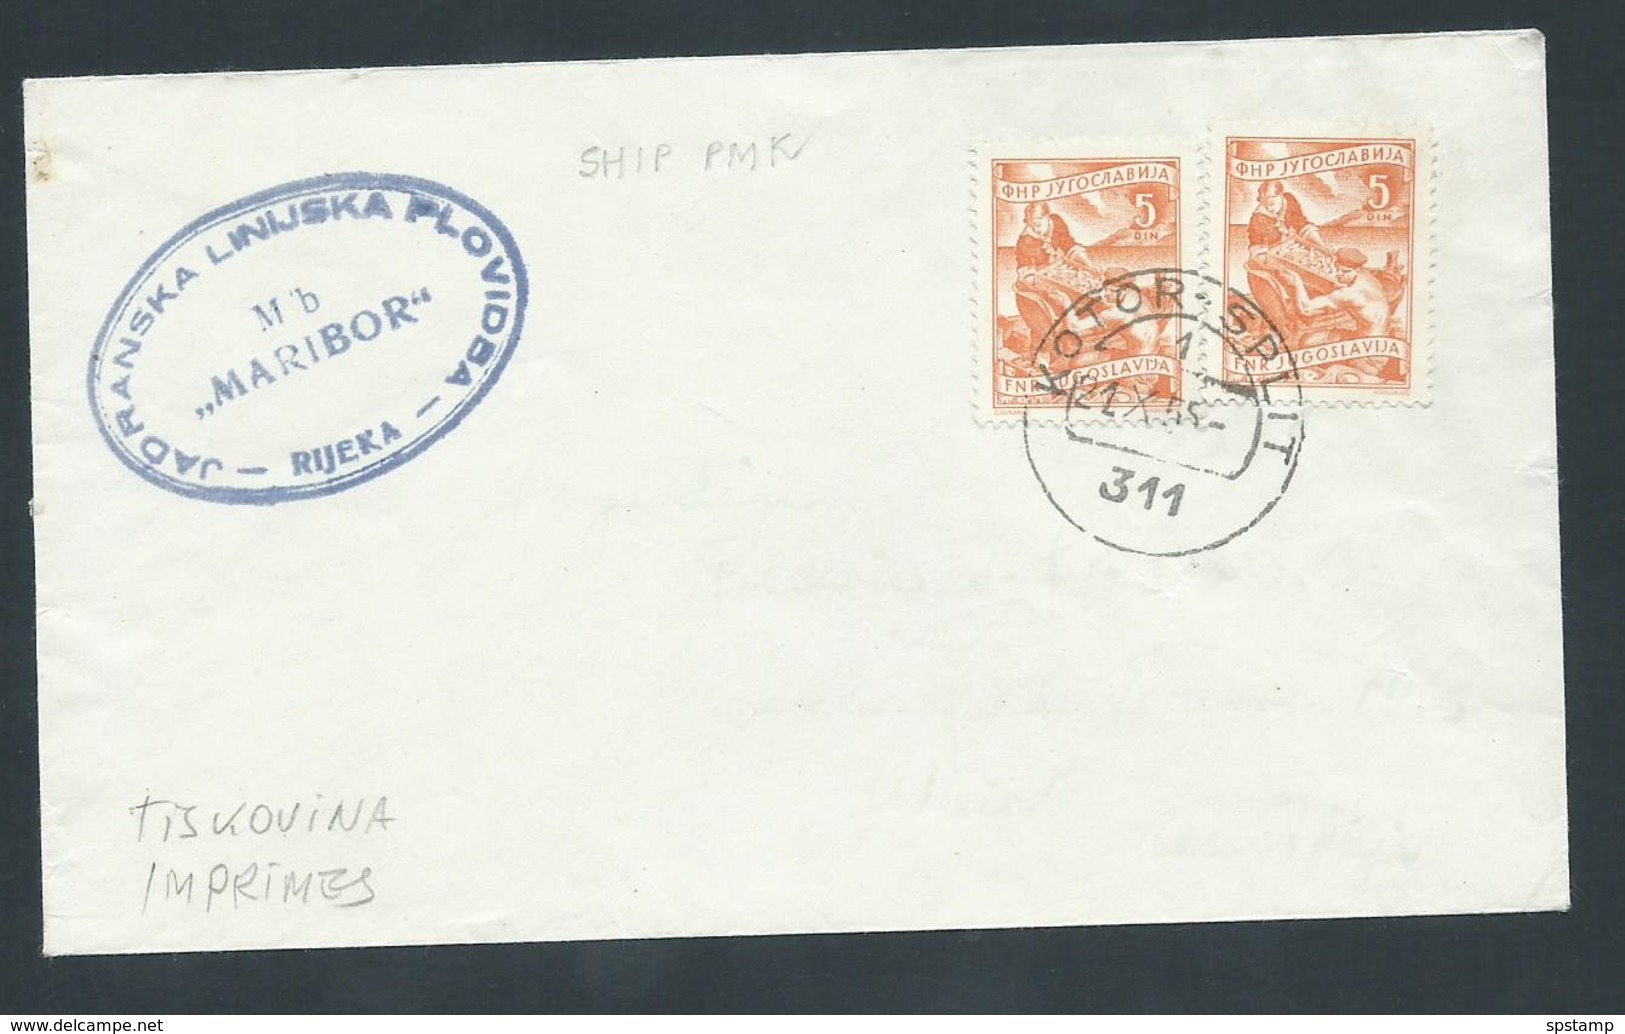 Yugoslavia 1955 Ship Mail Cover Kotor - Split To Austria Ship Maribor - Covers & Documents